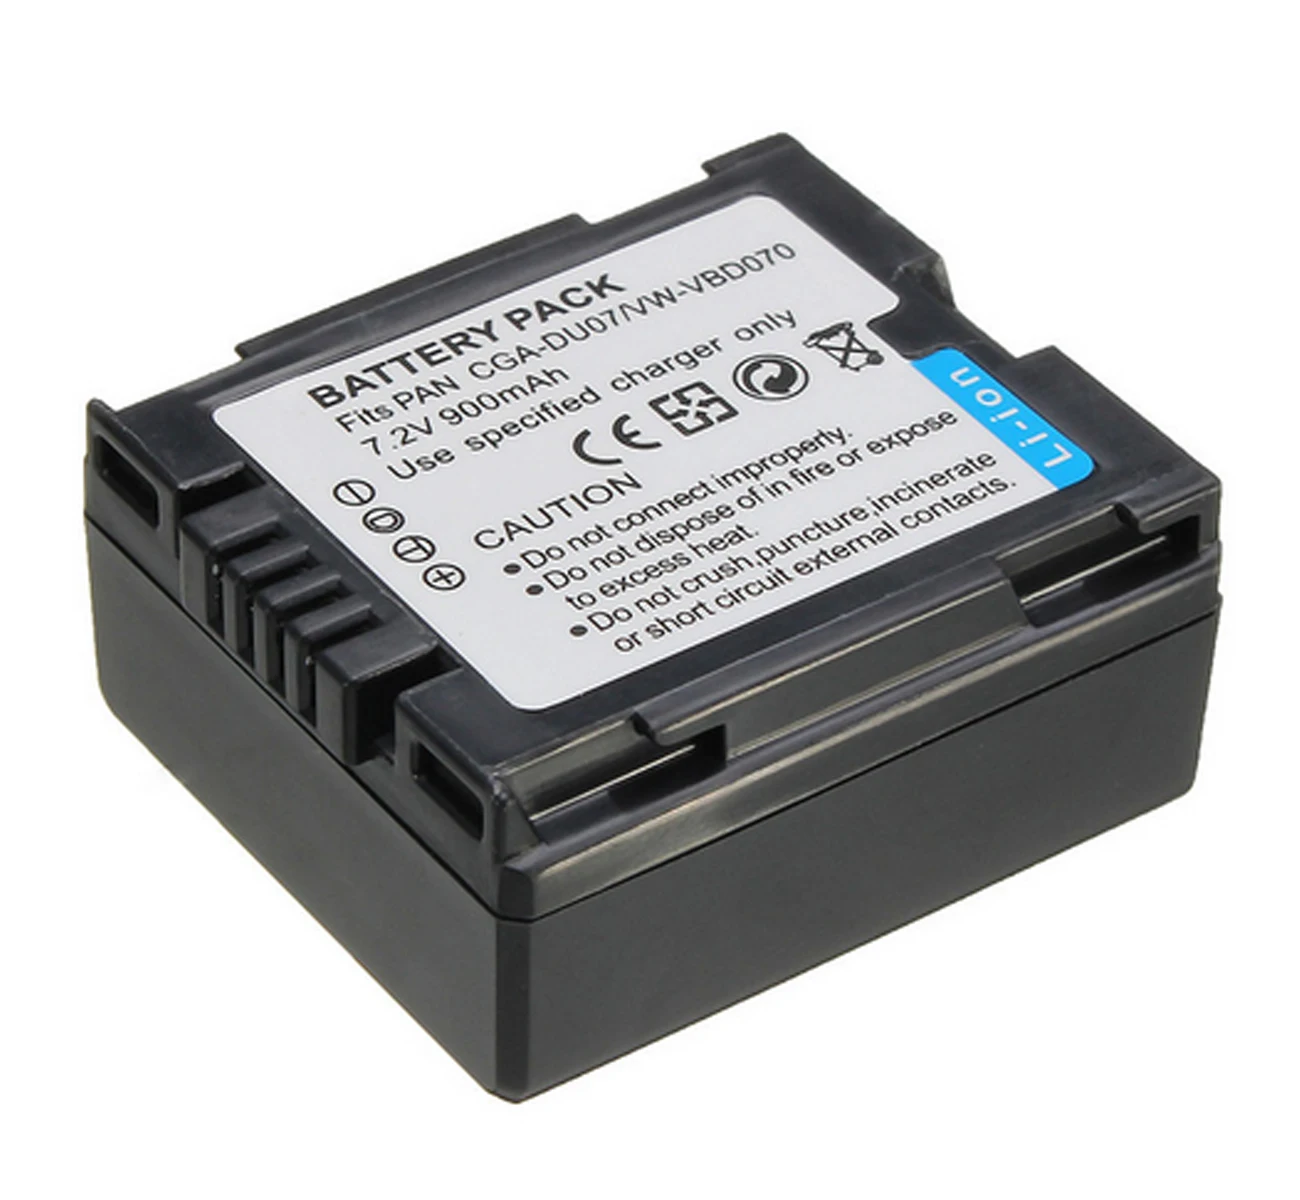 

Battery Pack for Hitachi DZ-MV350A, DZ-MV380A, DZ-MV550A, DZ-MV580A, DZ-MV730A, DZ-MV750MA, DZ-MV780A, DZ-MV780MA Camcorder